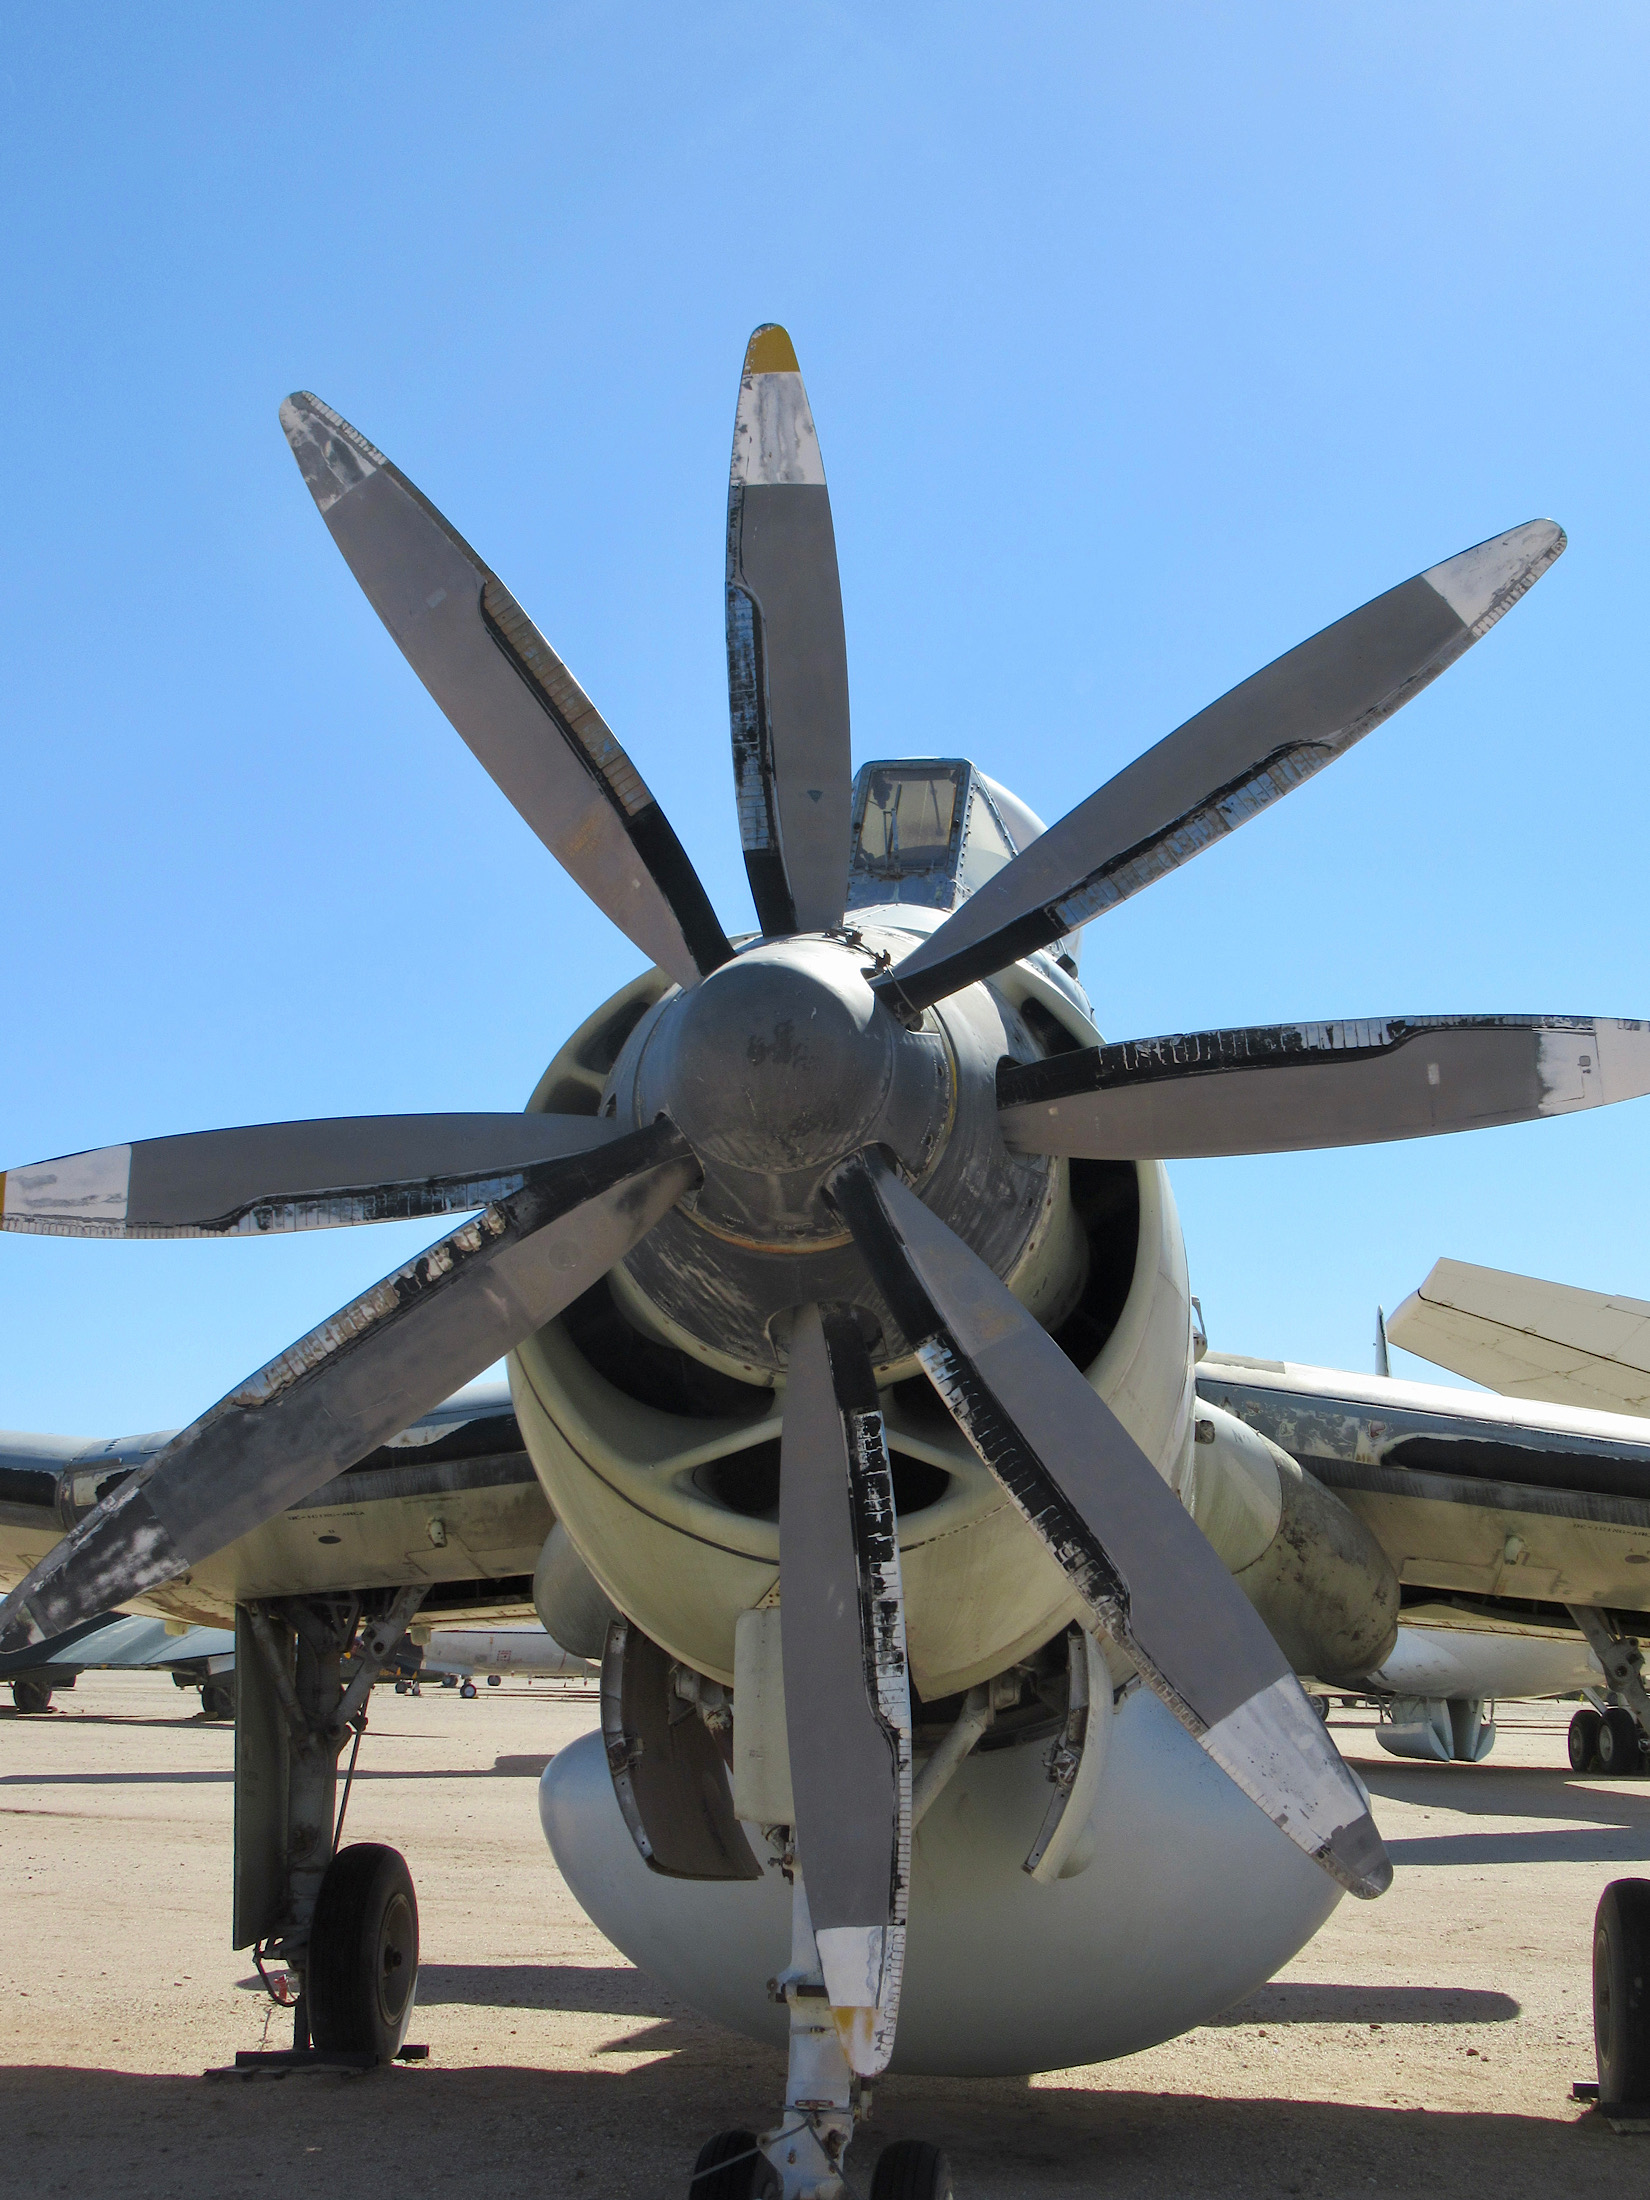 Starburst arrangement of multi-blade prop on aircraft engine.